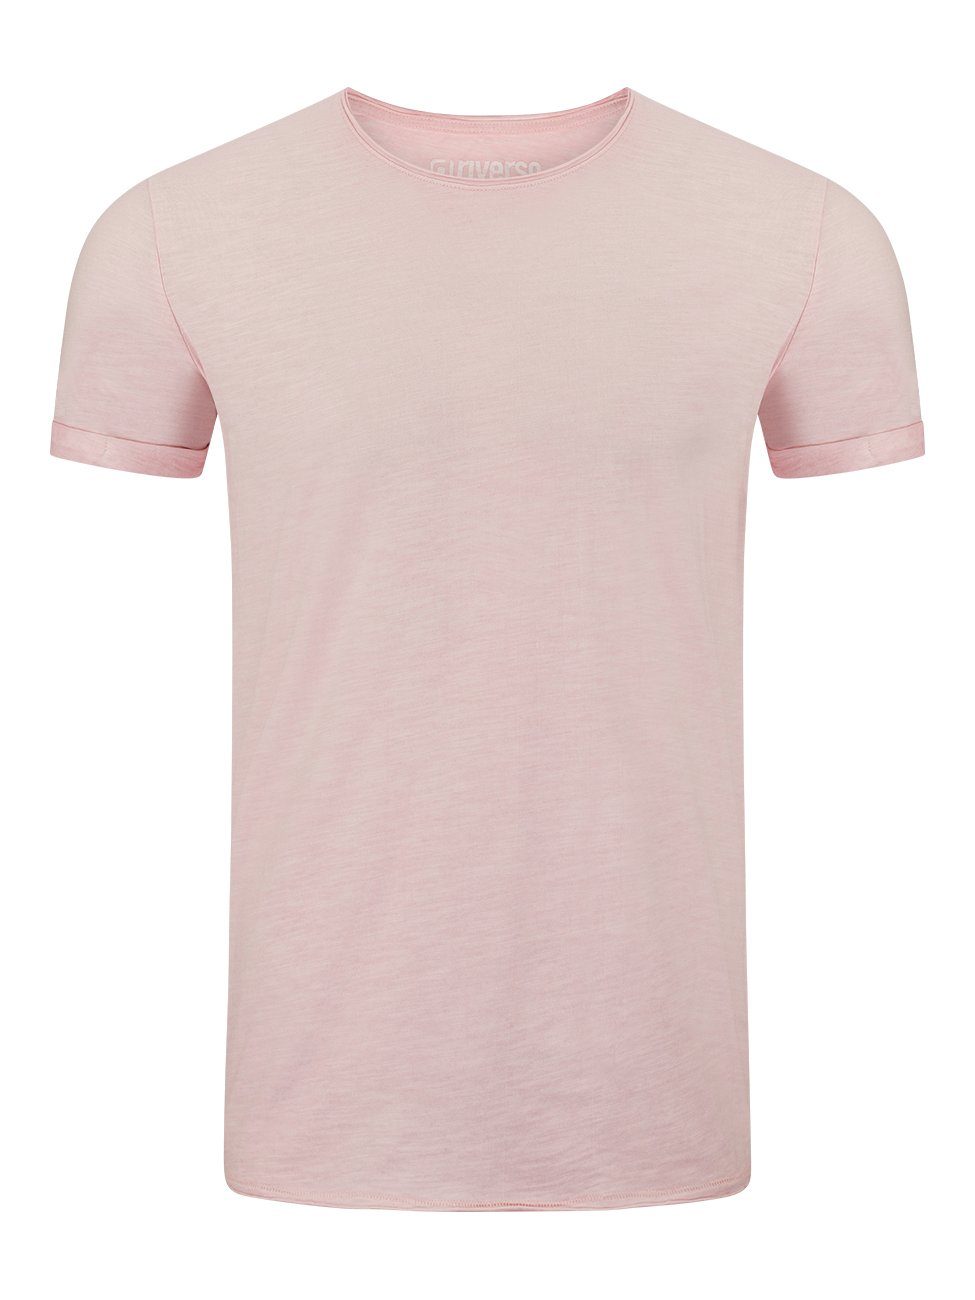 riverso T-Shirt Herren Basic Shirt RIVMatteo Regular Fit (1-tlg) Basic Kurzarm Tee Shirt mit Rundhalsausschnitt aus 100% Baumwolle